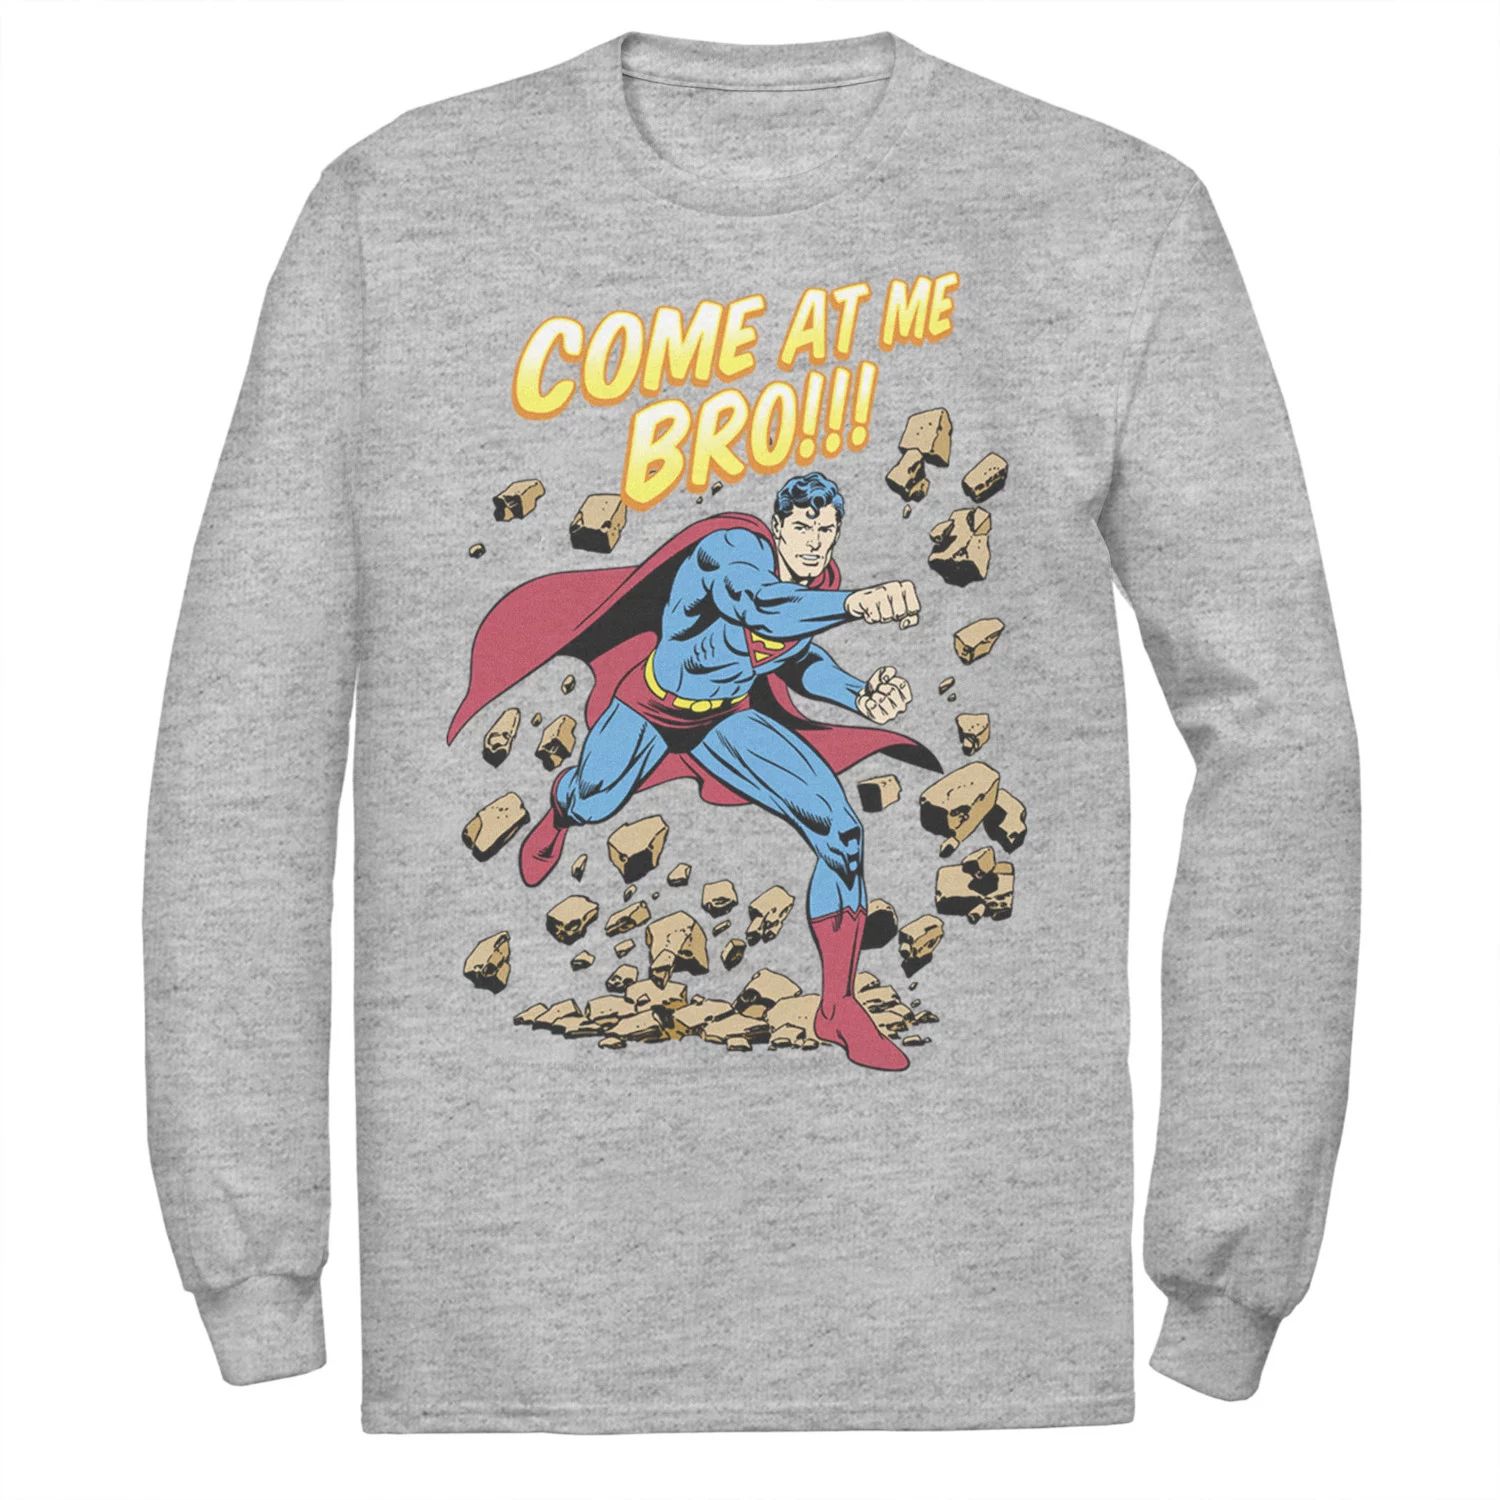 Мужская футболка с текстовым плакатом DC Comics Superman Come At Me Bro